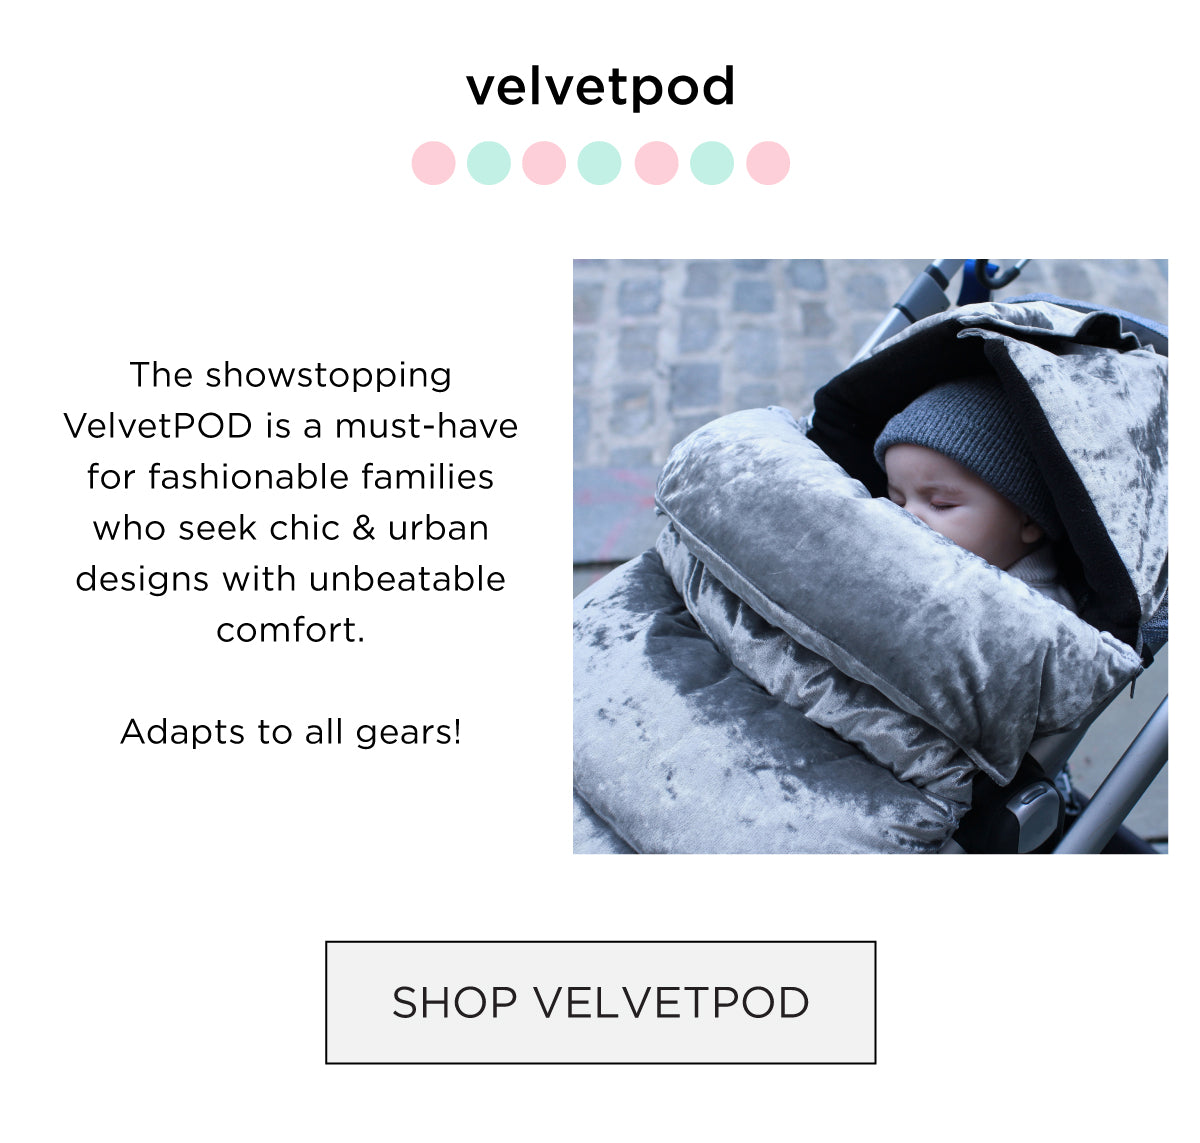 VelvetPOD